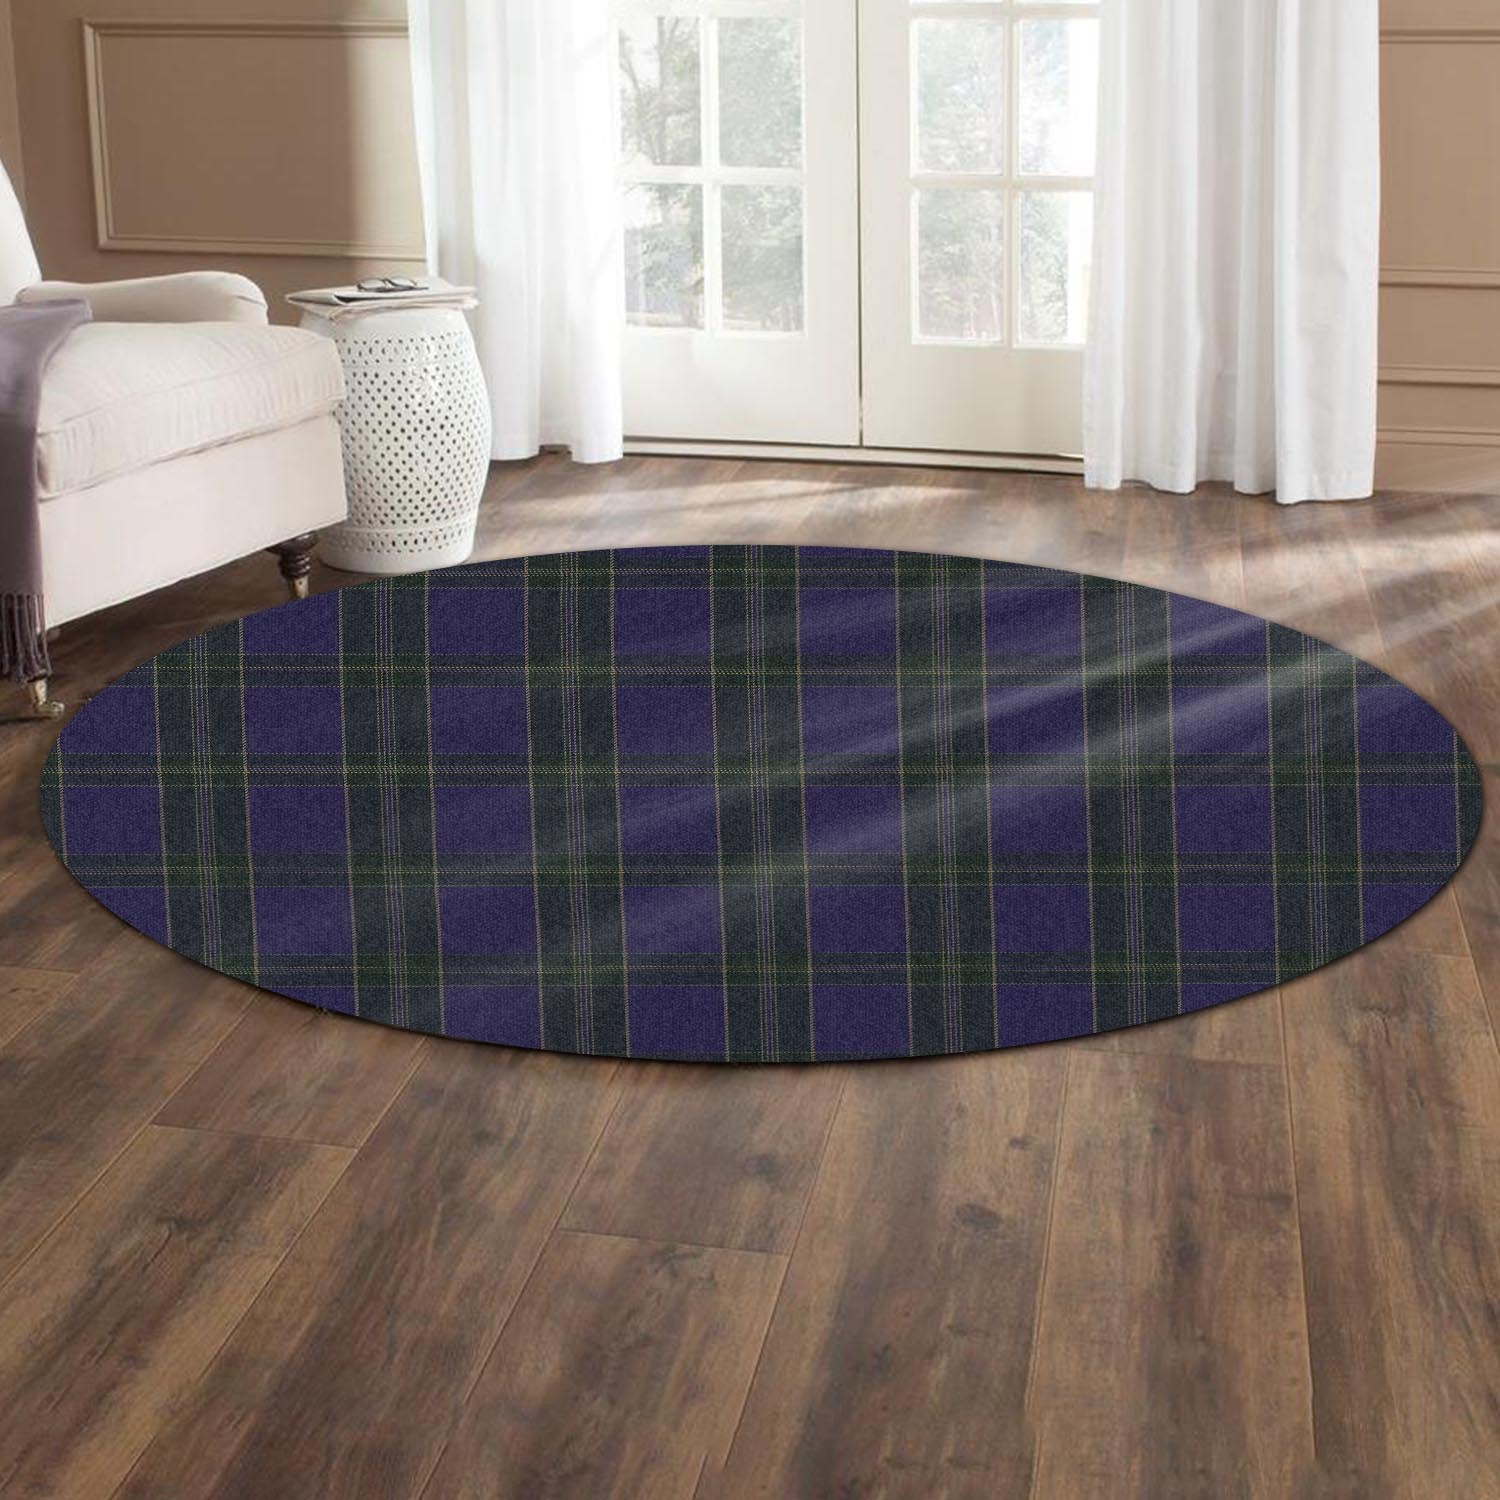 lewis-of-wales-tartan-round-rug